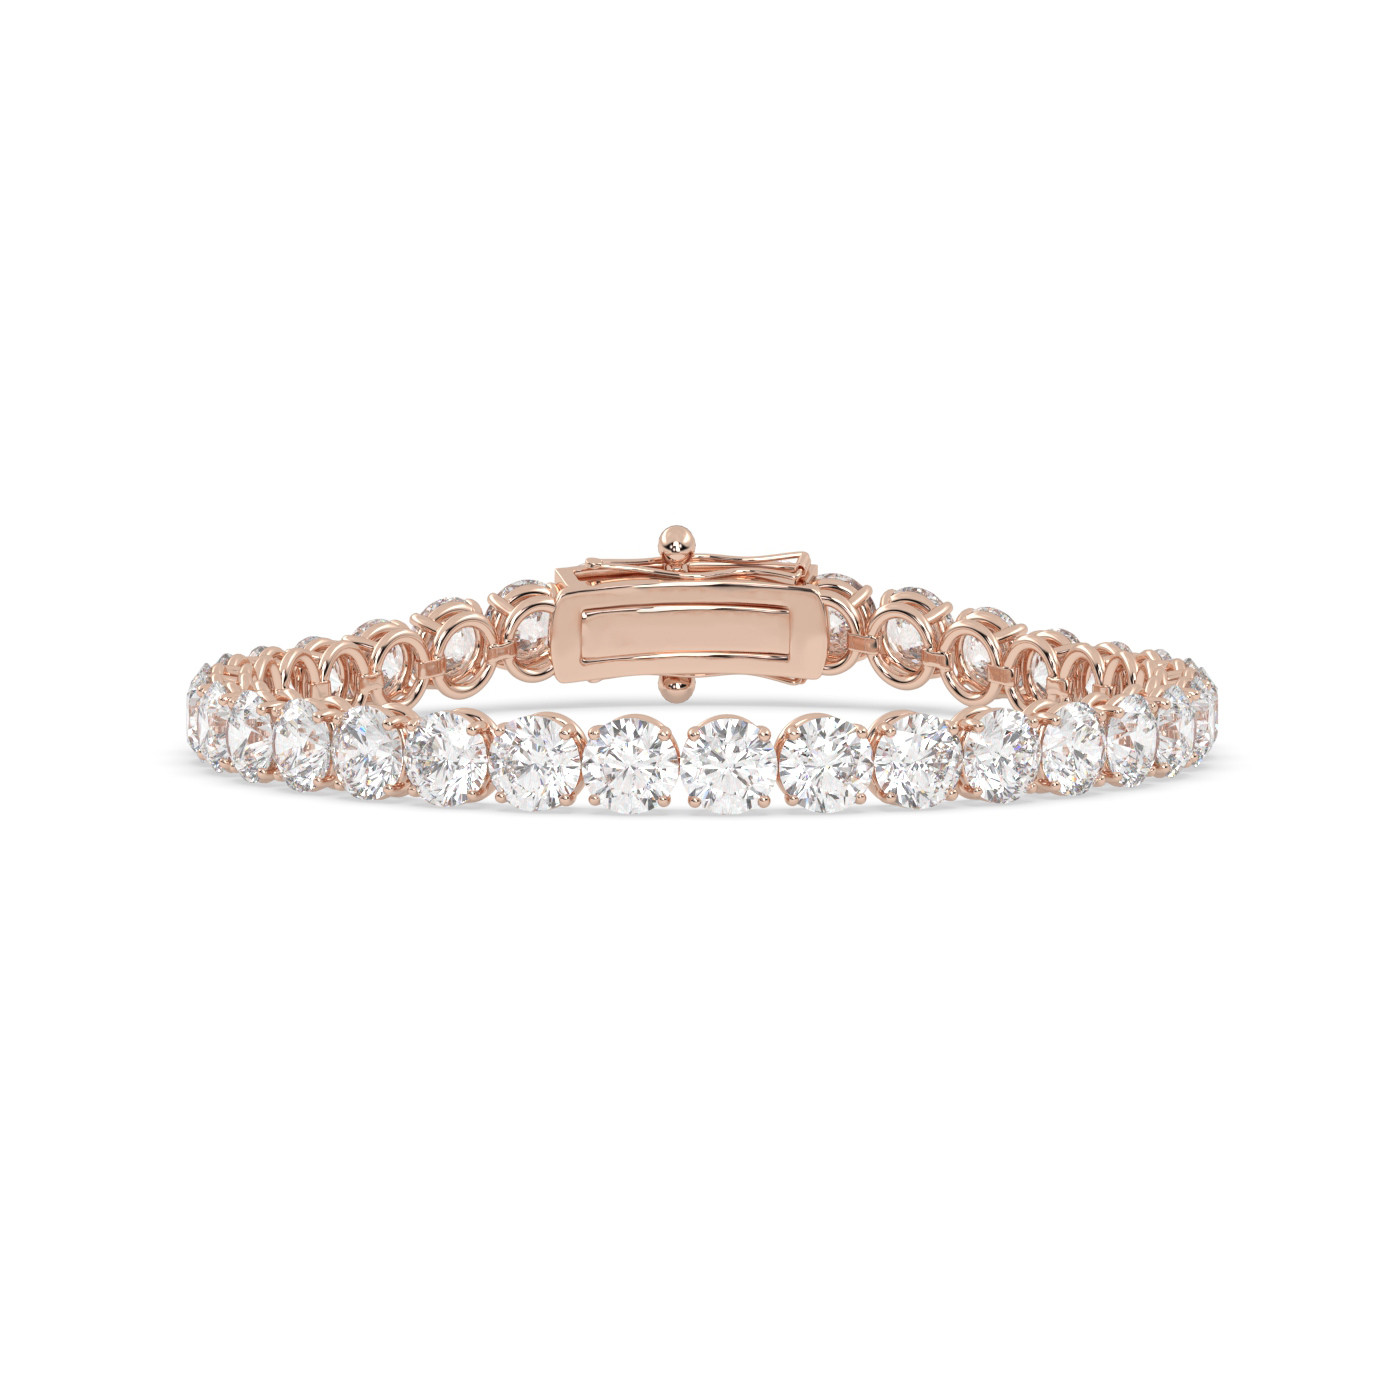 18k rose gold  3.0 carat round diamond tennis bracelet with traditional lock sytem Photos & images